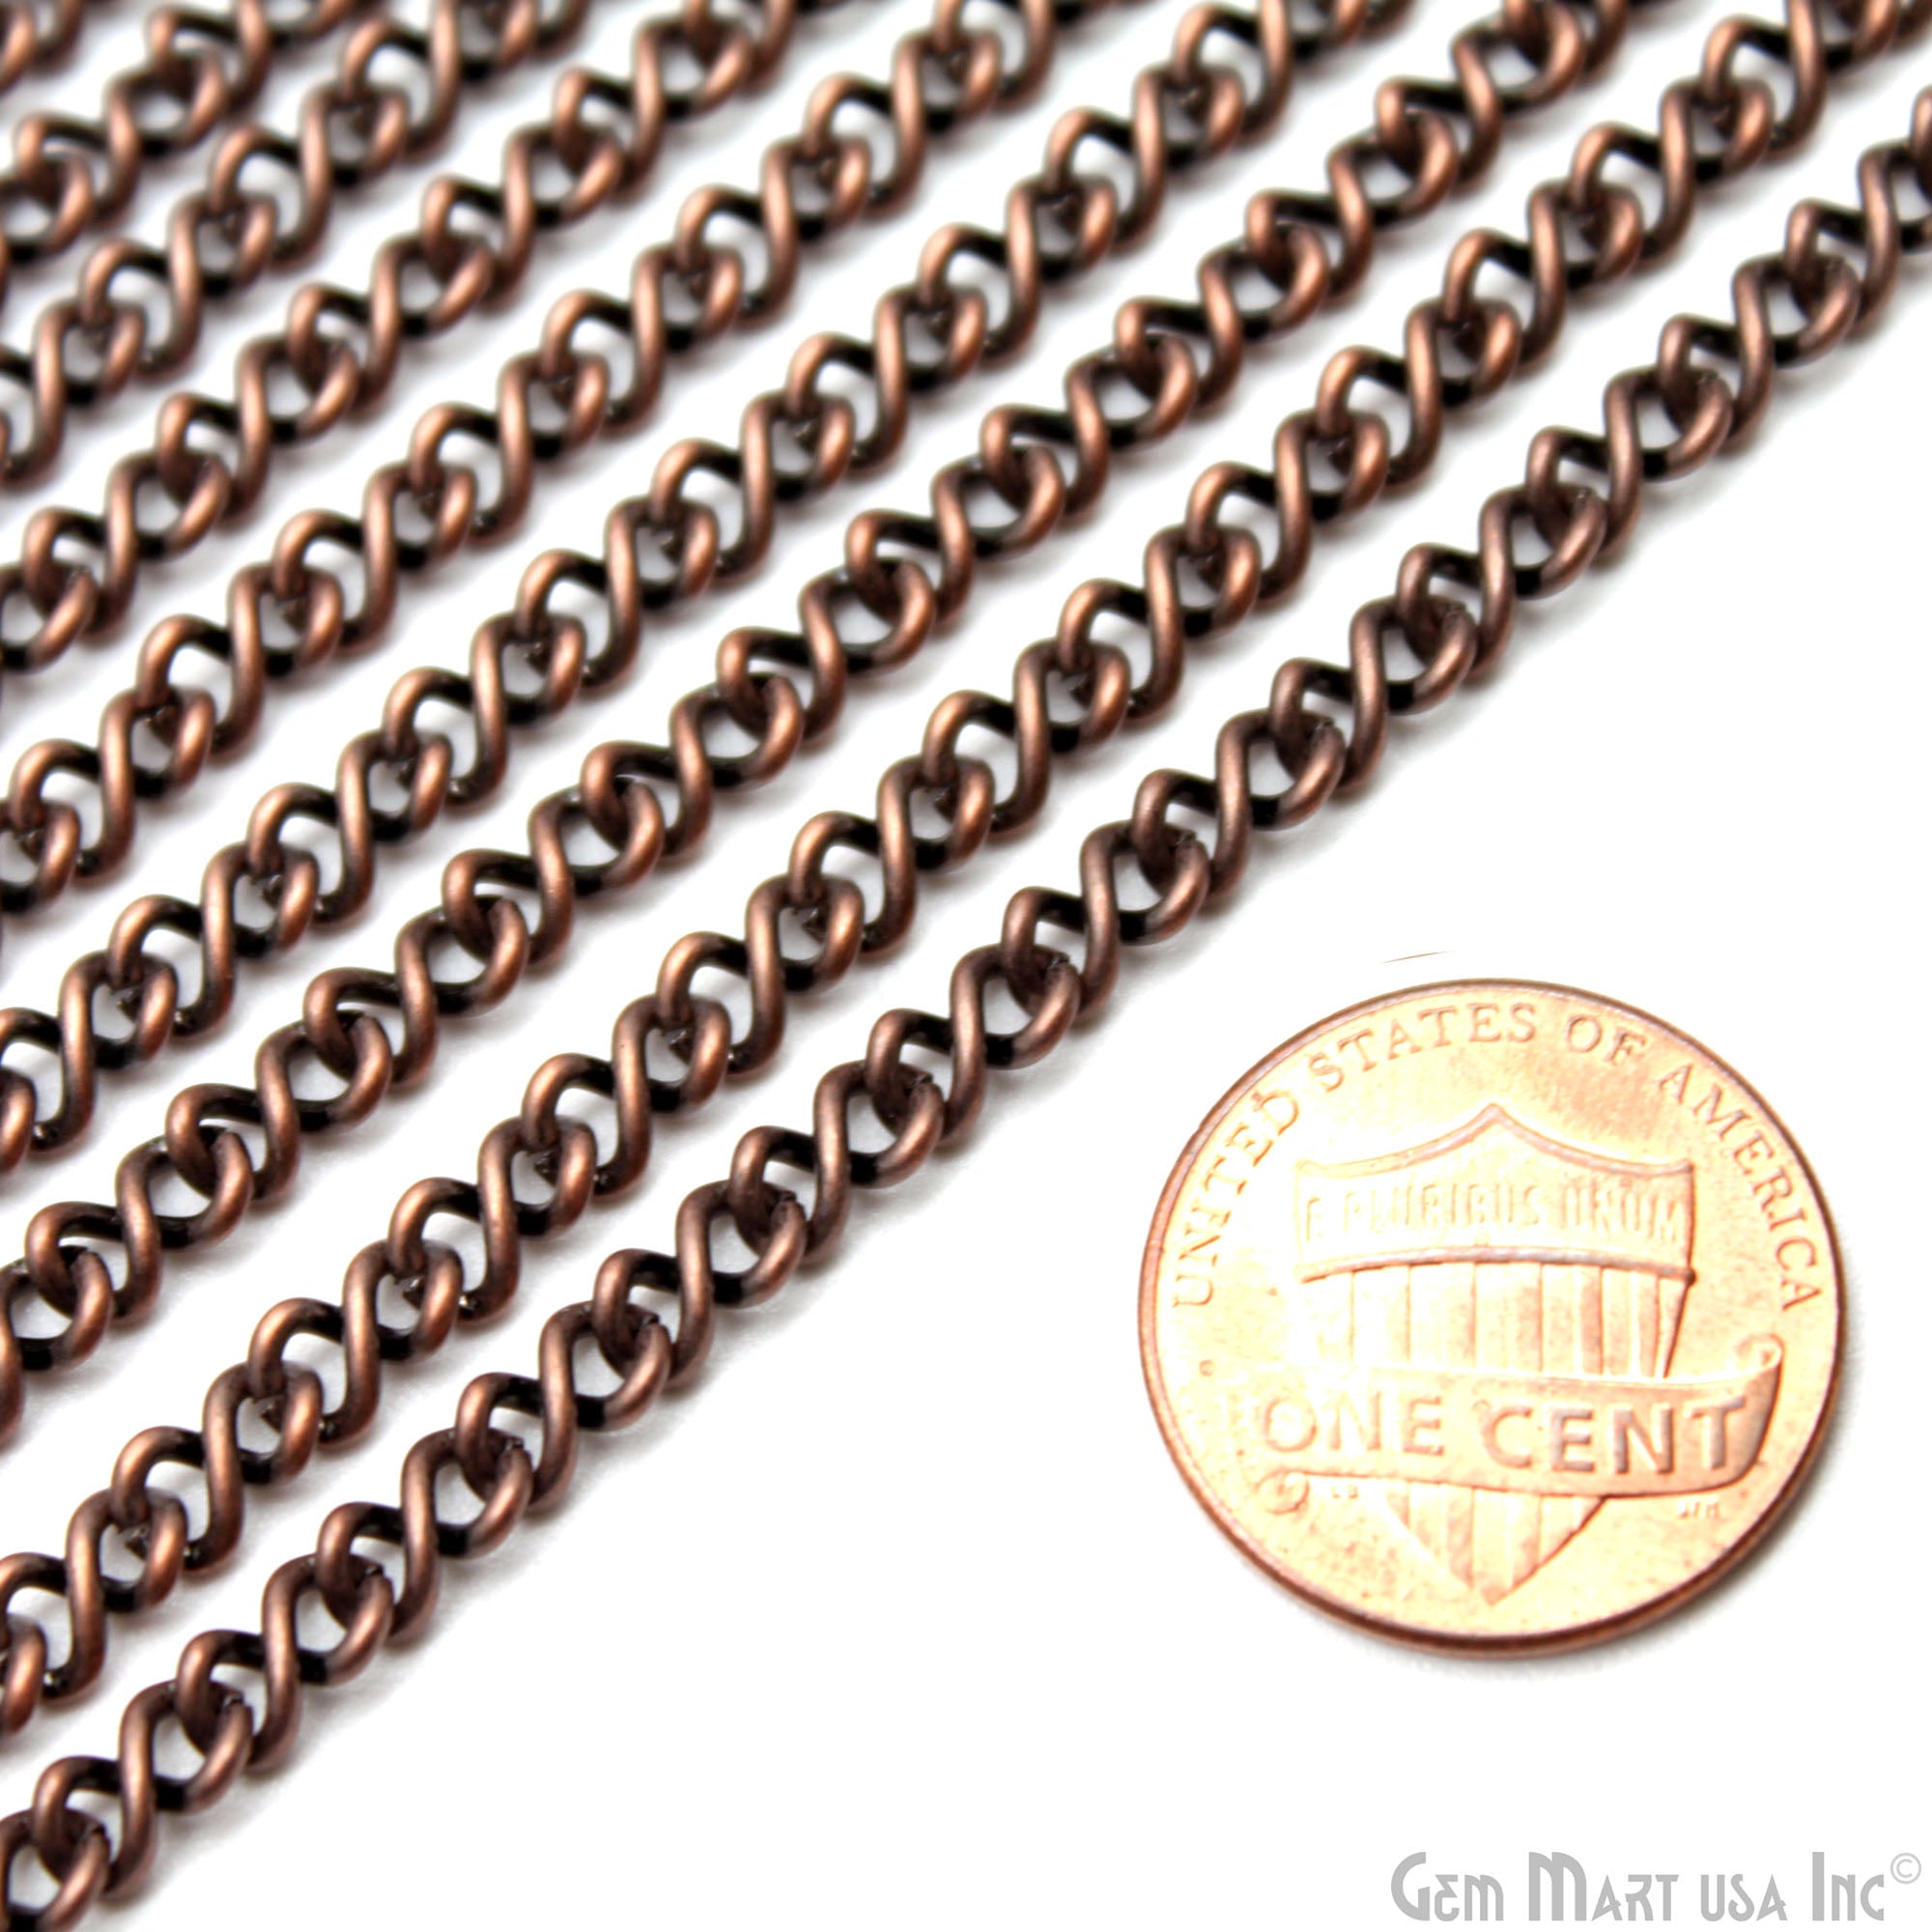 Copper Vintage Link Chain, 4mm Copper Vintage Finding Chain